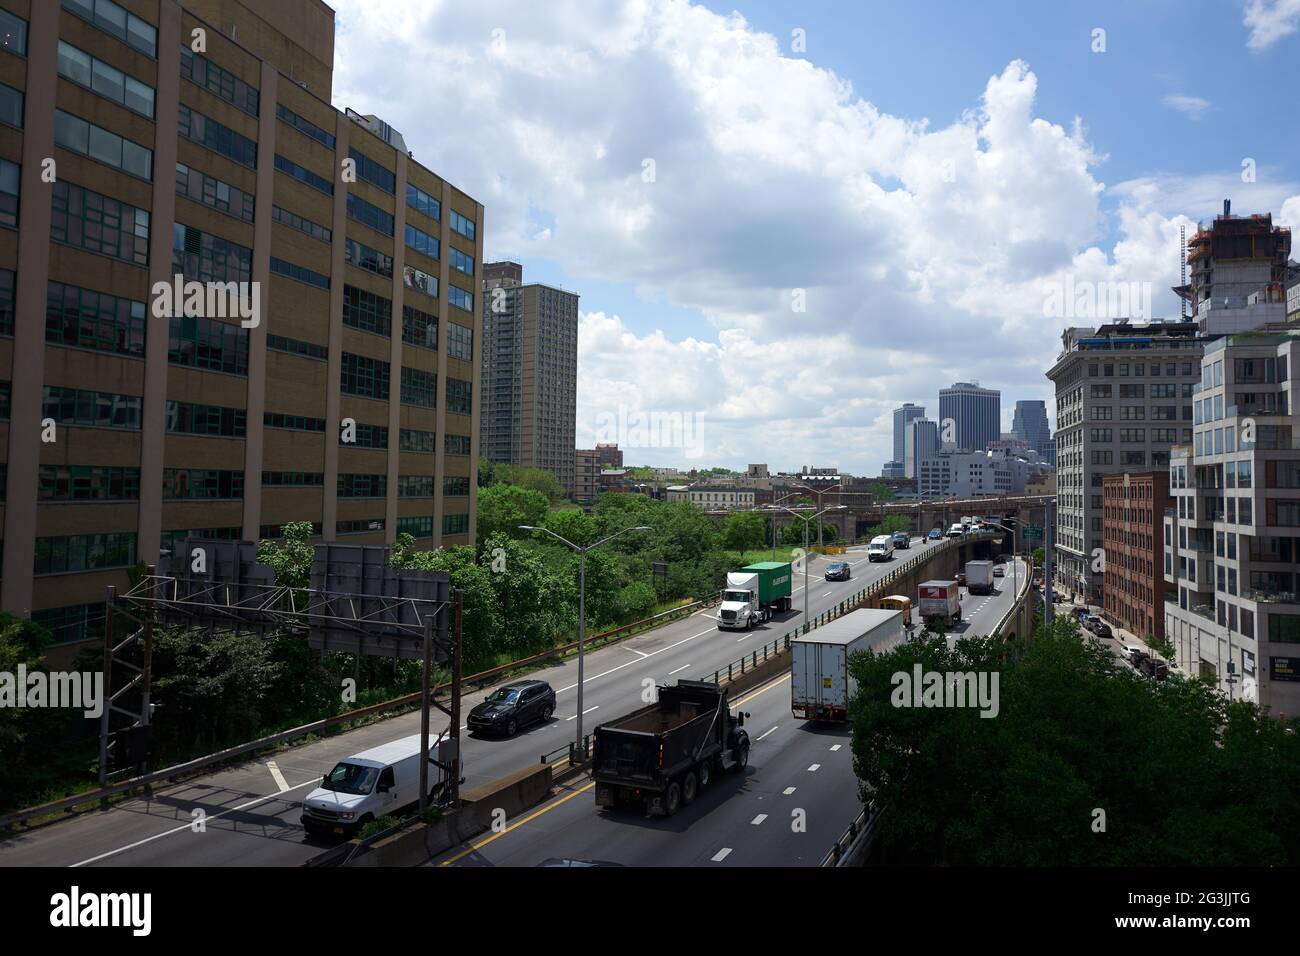 Brooklyn Queens Expressway aerial shot Stock Photo